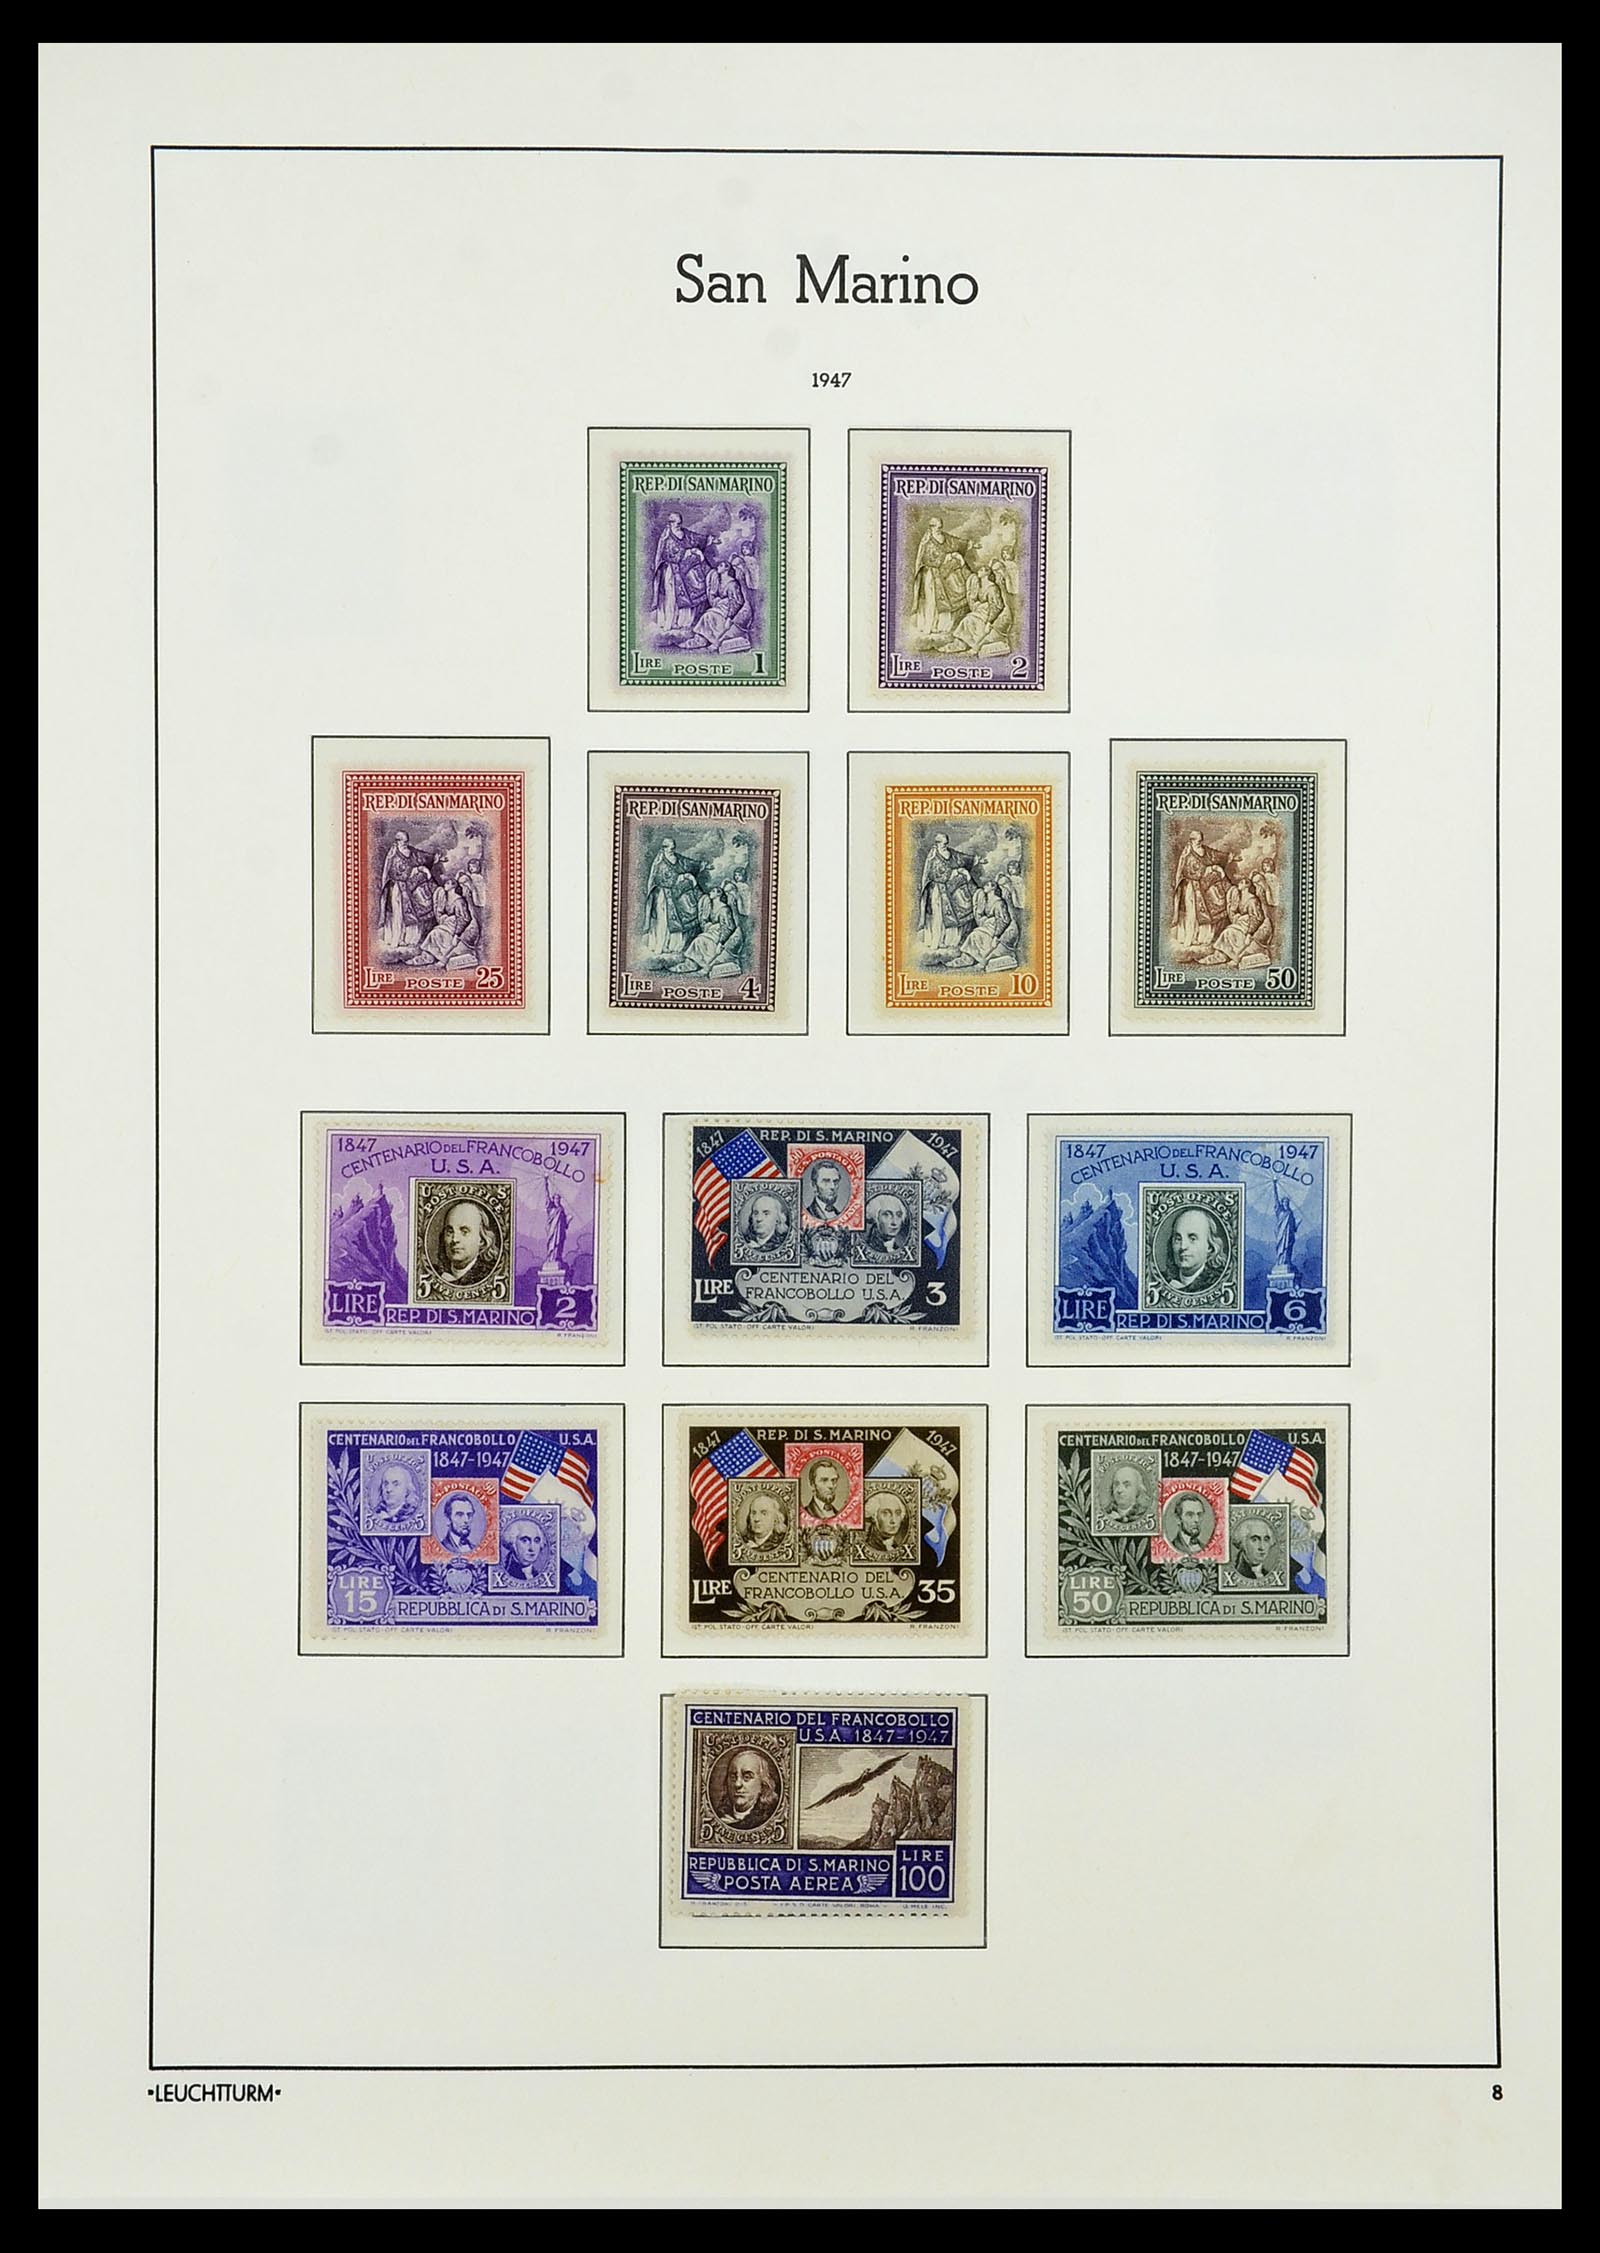 34243 042 - Stamp collection 34243 San Marino 1877-2008.